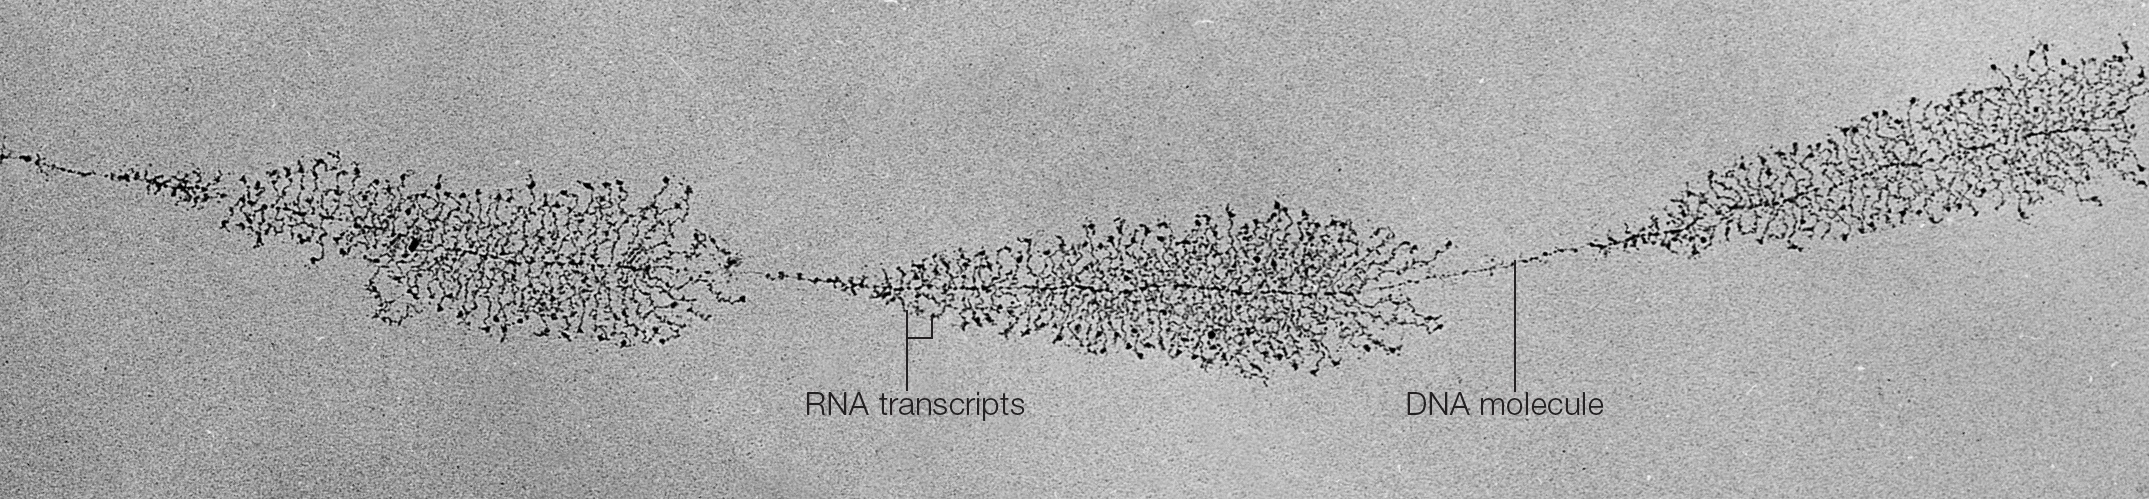 RNA "Christmas tree" transcripts